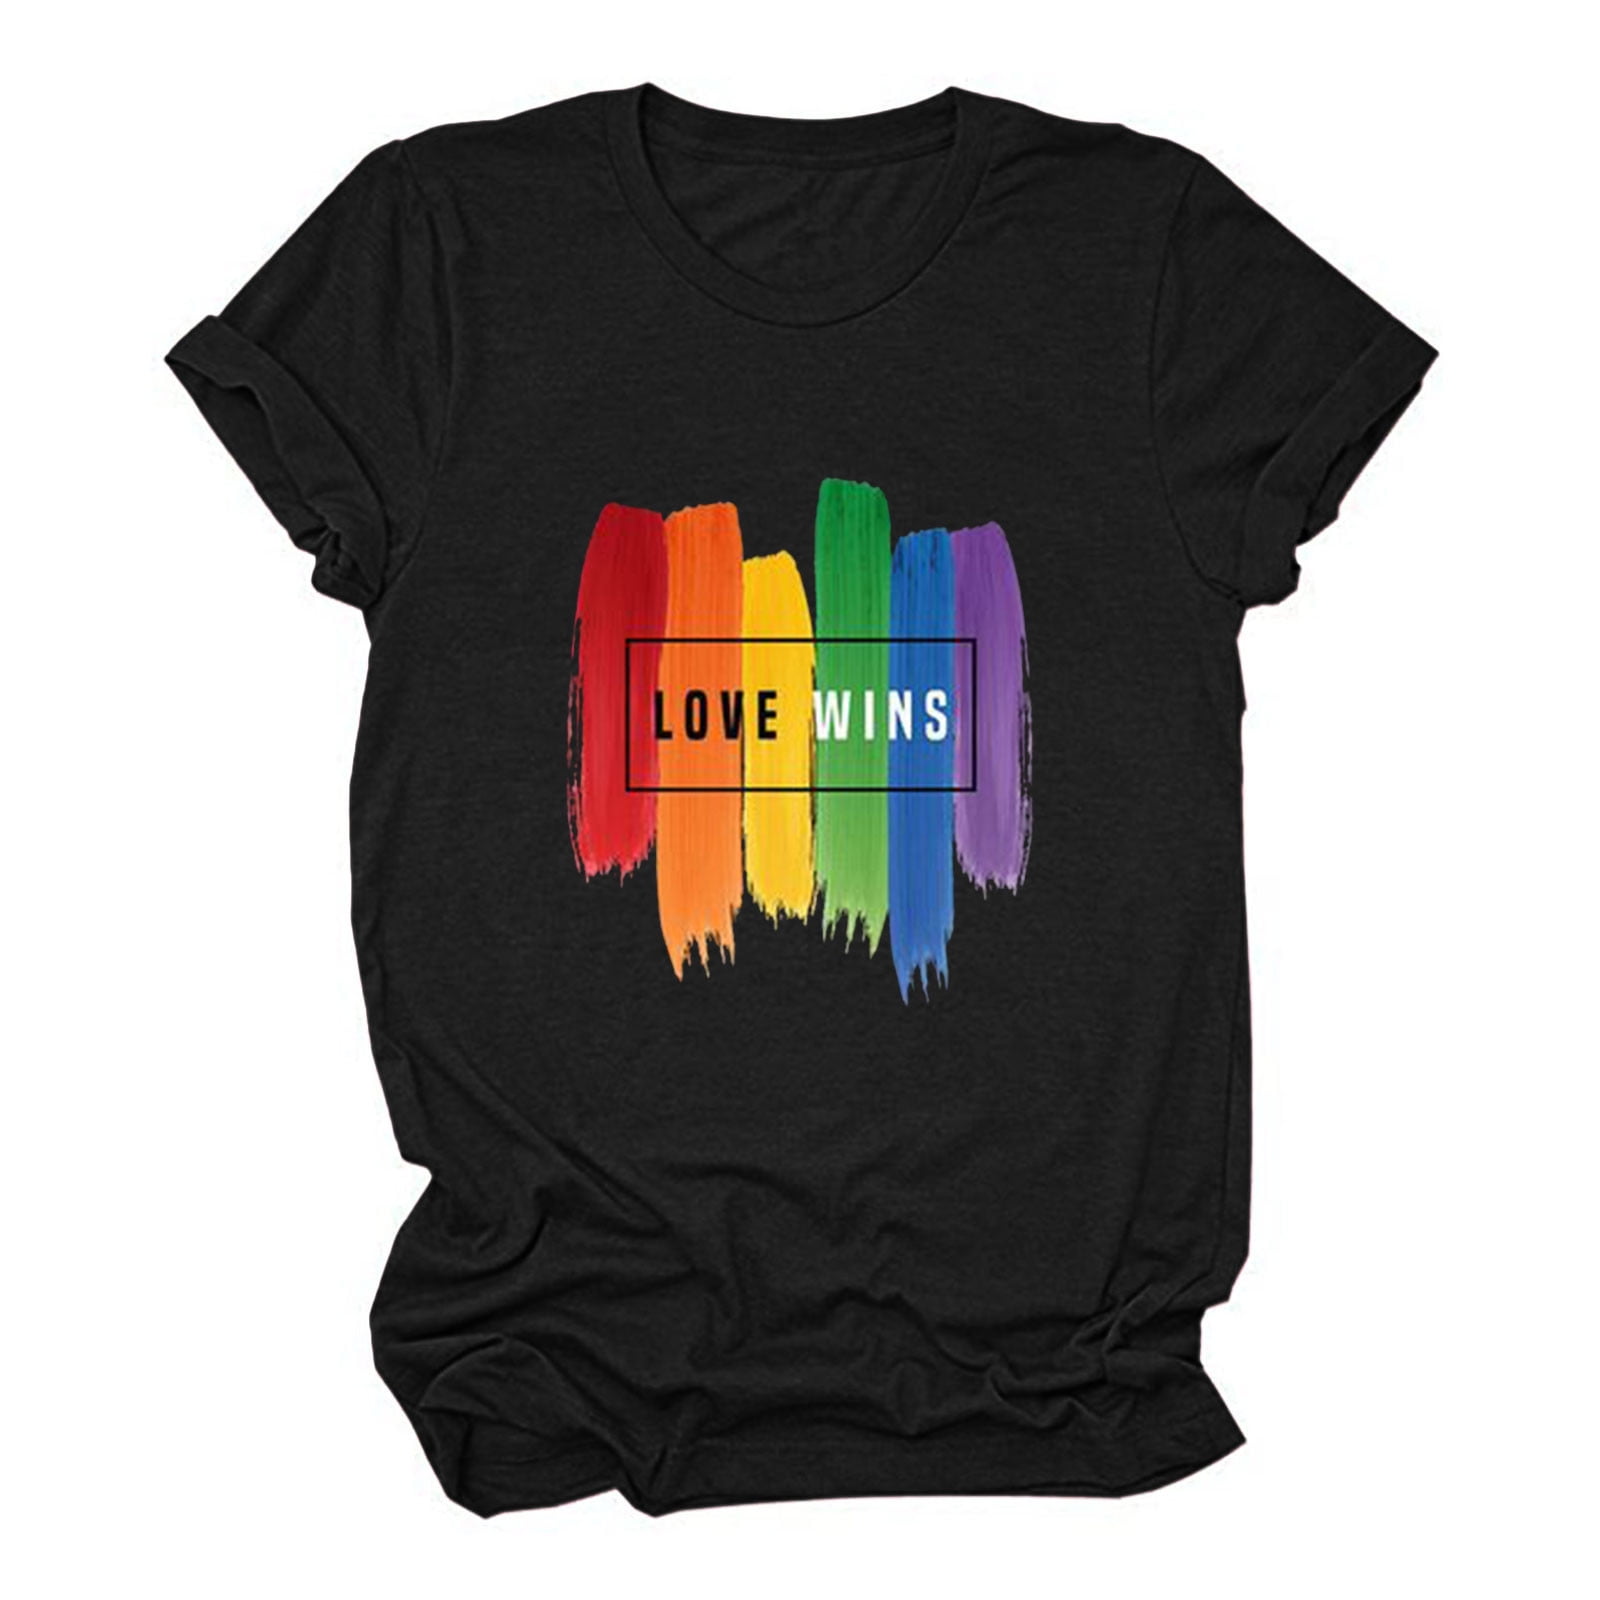 Mchoice Love Is Love Tshirt Women Rainbow Pride Shirt Lesbian Bisexual Transgender Shirt Lgbtq 